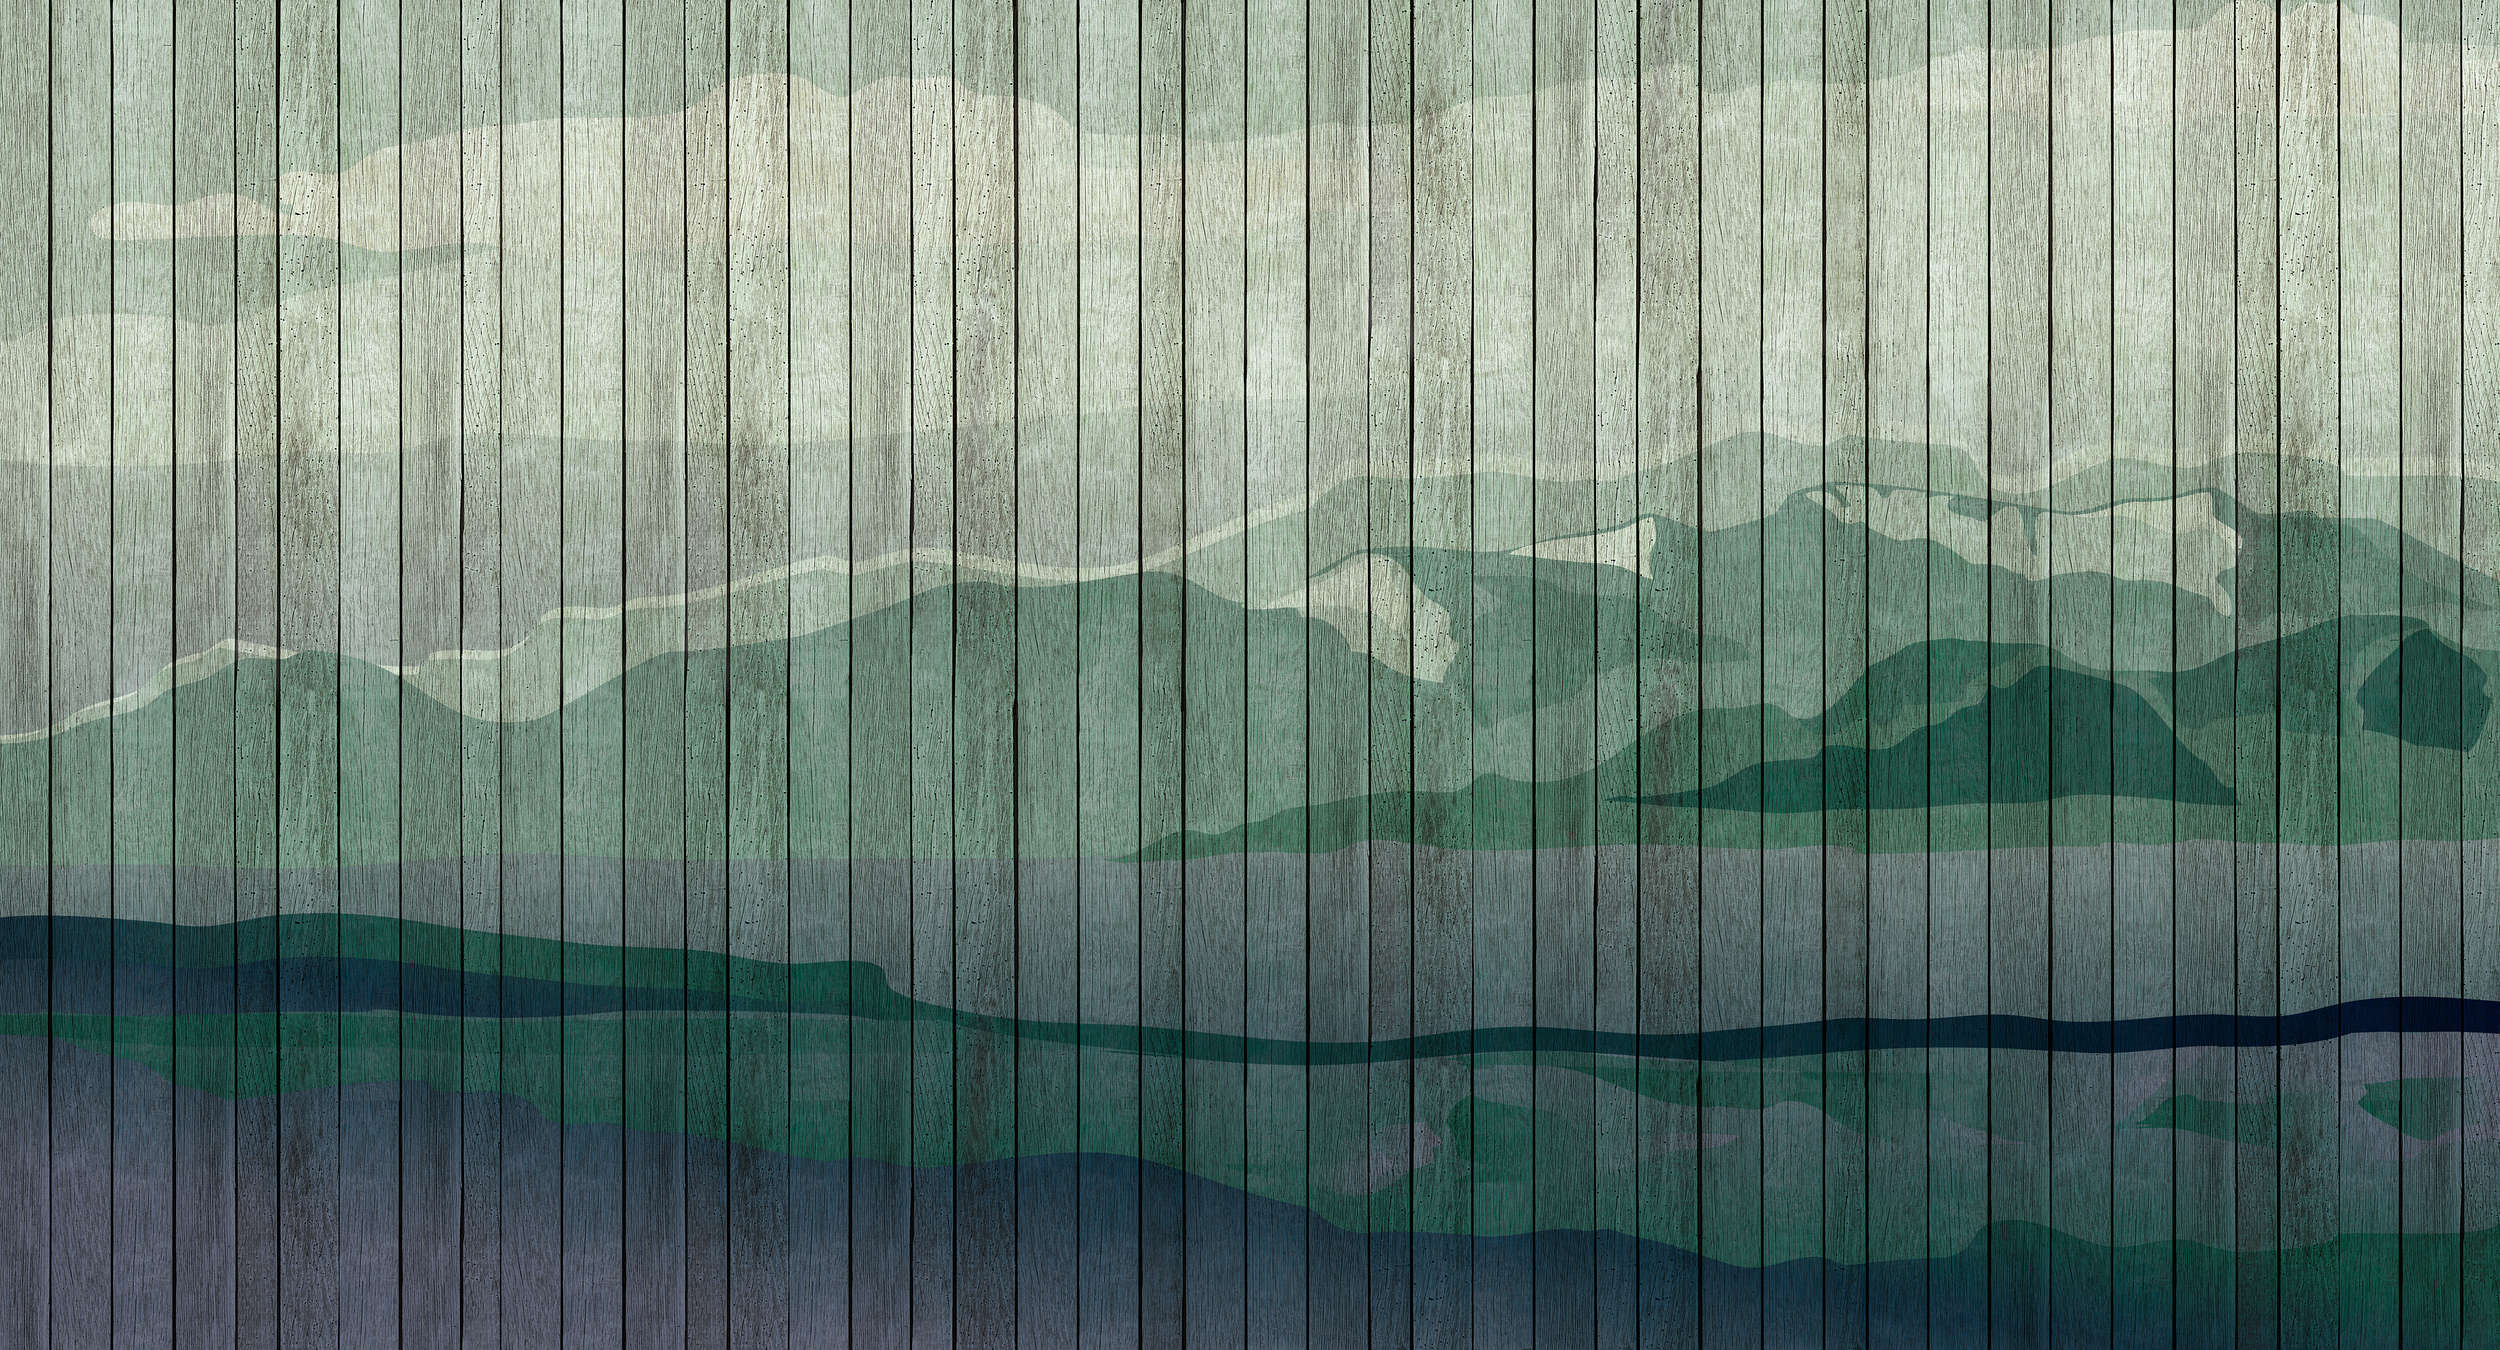             Mountains 3 - Moderne Fototapete Berglandschaft & Bretteroptik – Blau, Grün | Perlmutt Glattvlies
        